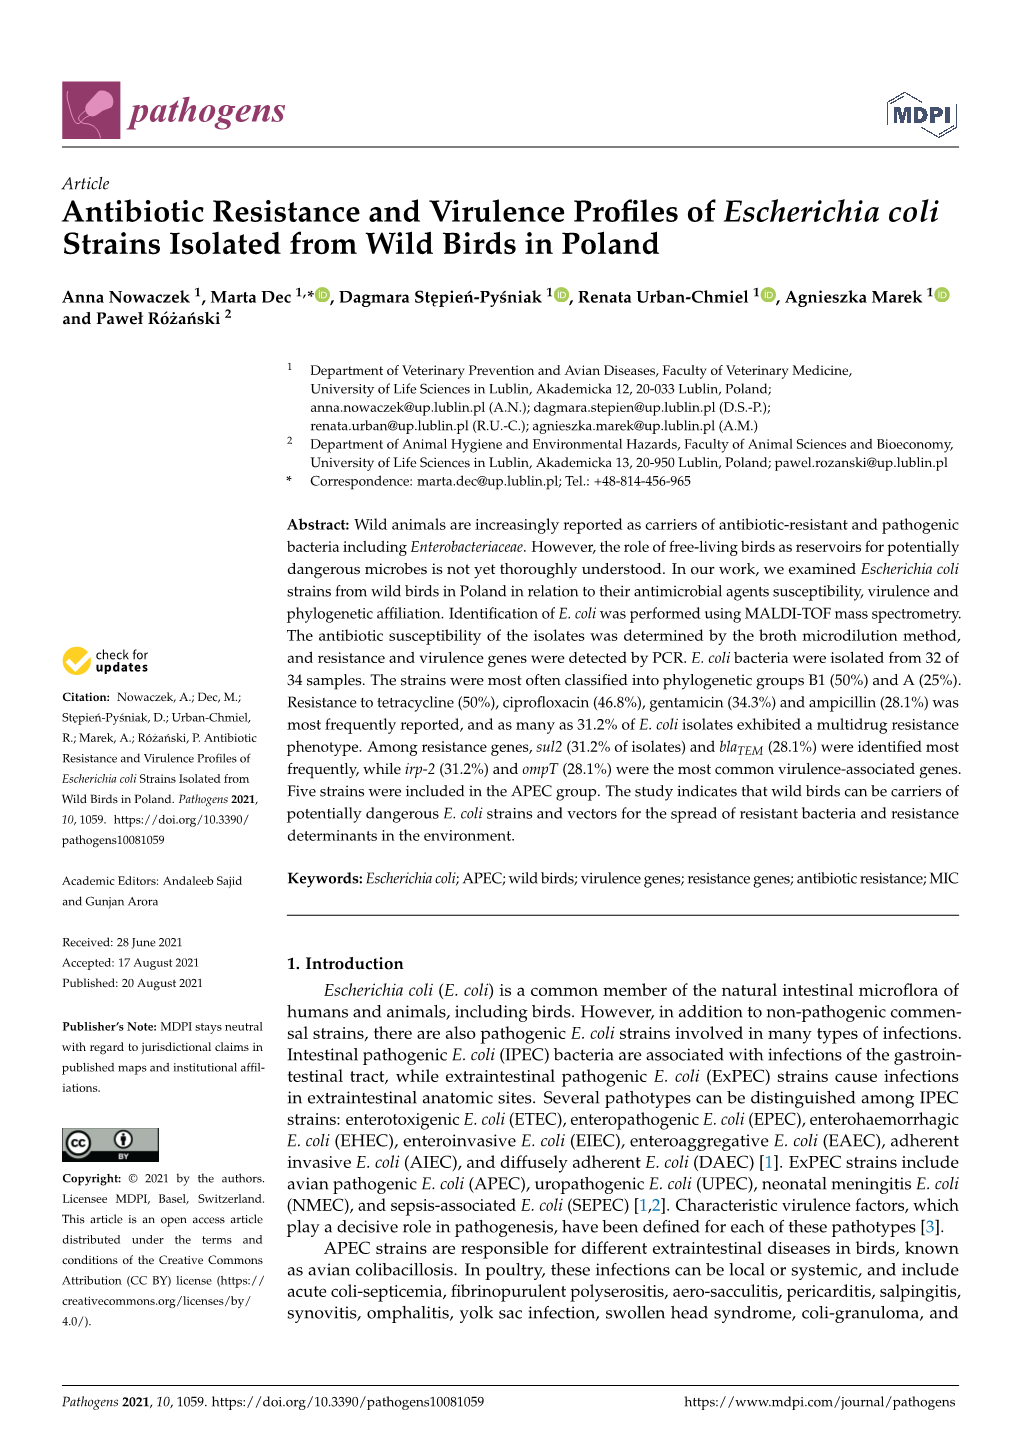 Antibiotic Resistance and Virulence Profiles of Escherichia Coli Strains